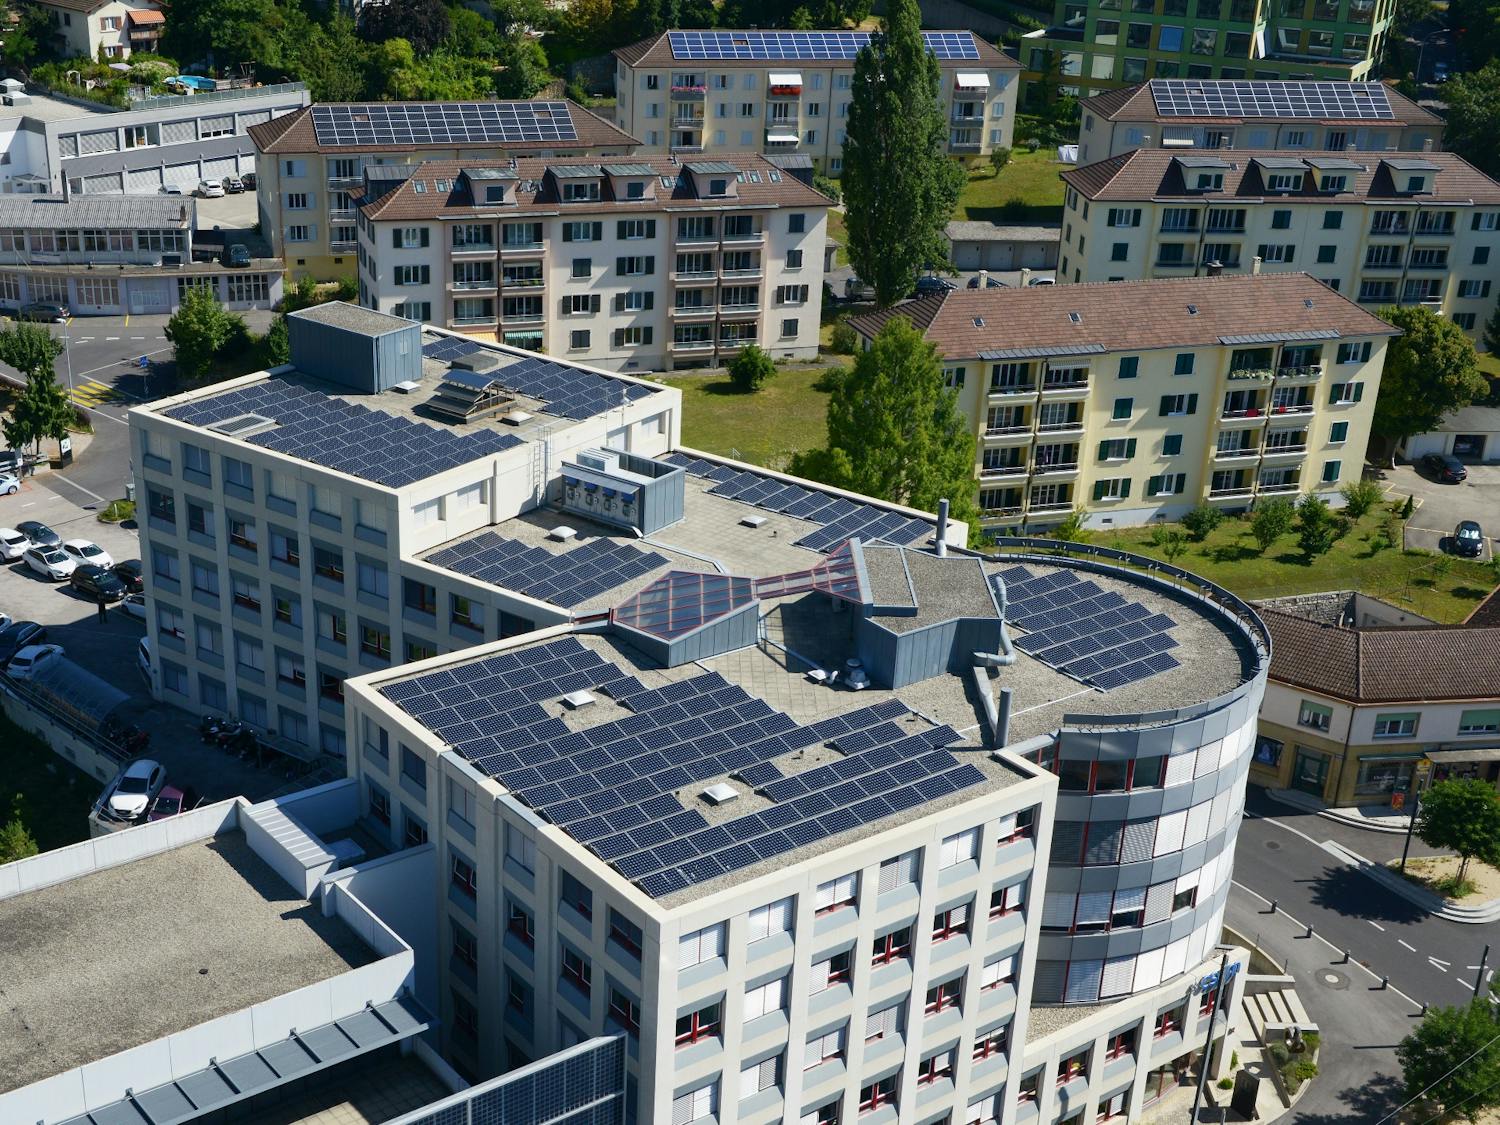 Aerial view of CSEM building